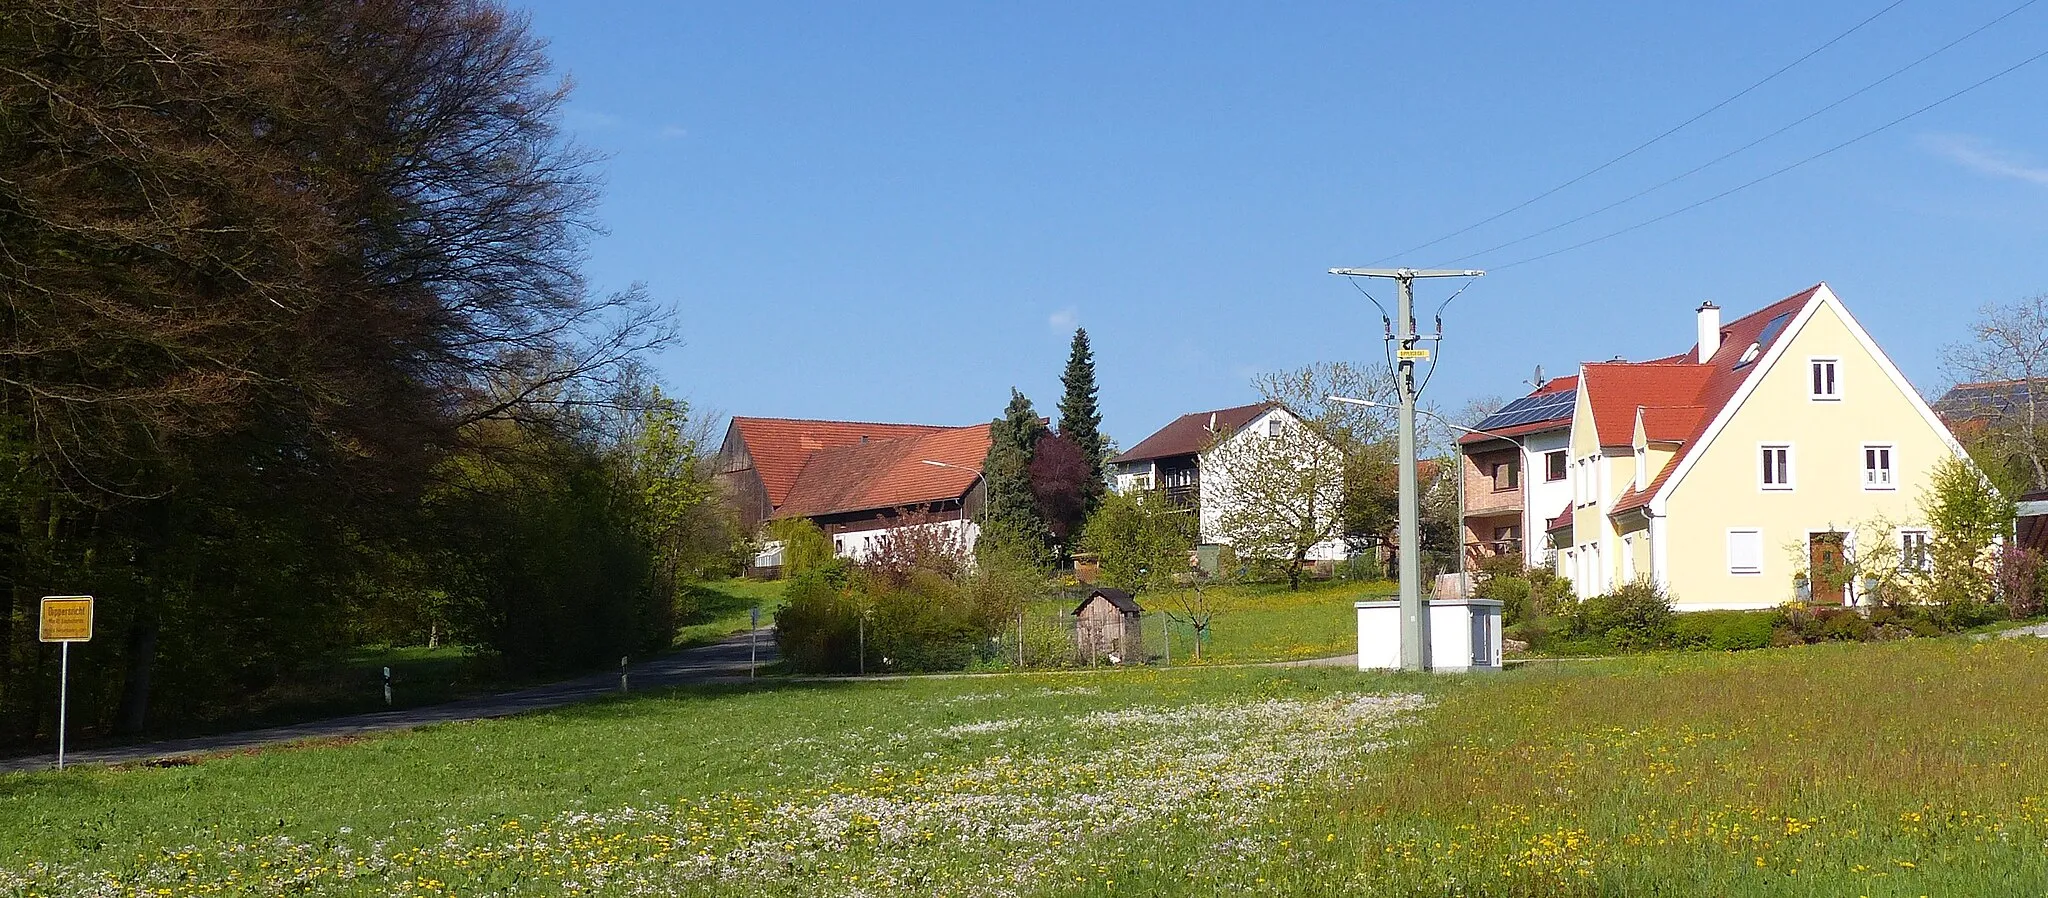 Photo showing: The village Dippersricht, part of the municipiality of Lauterhofen